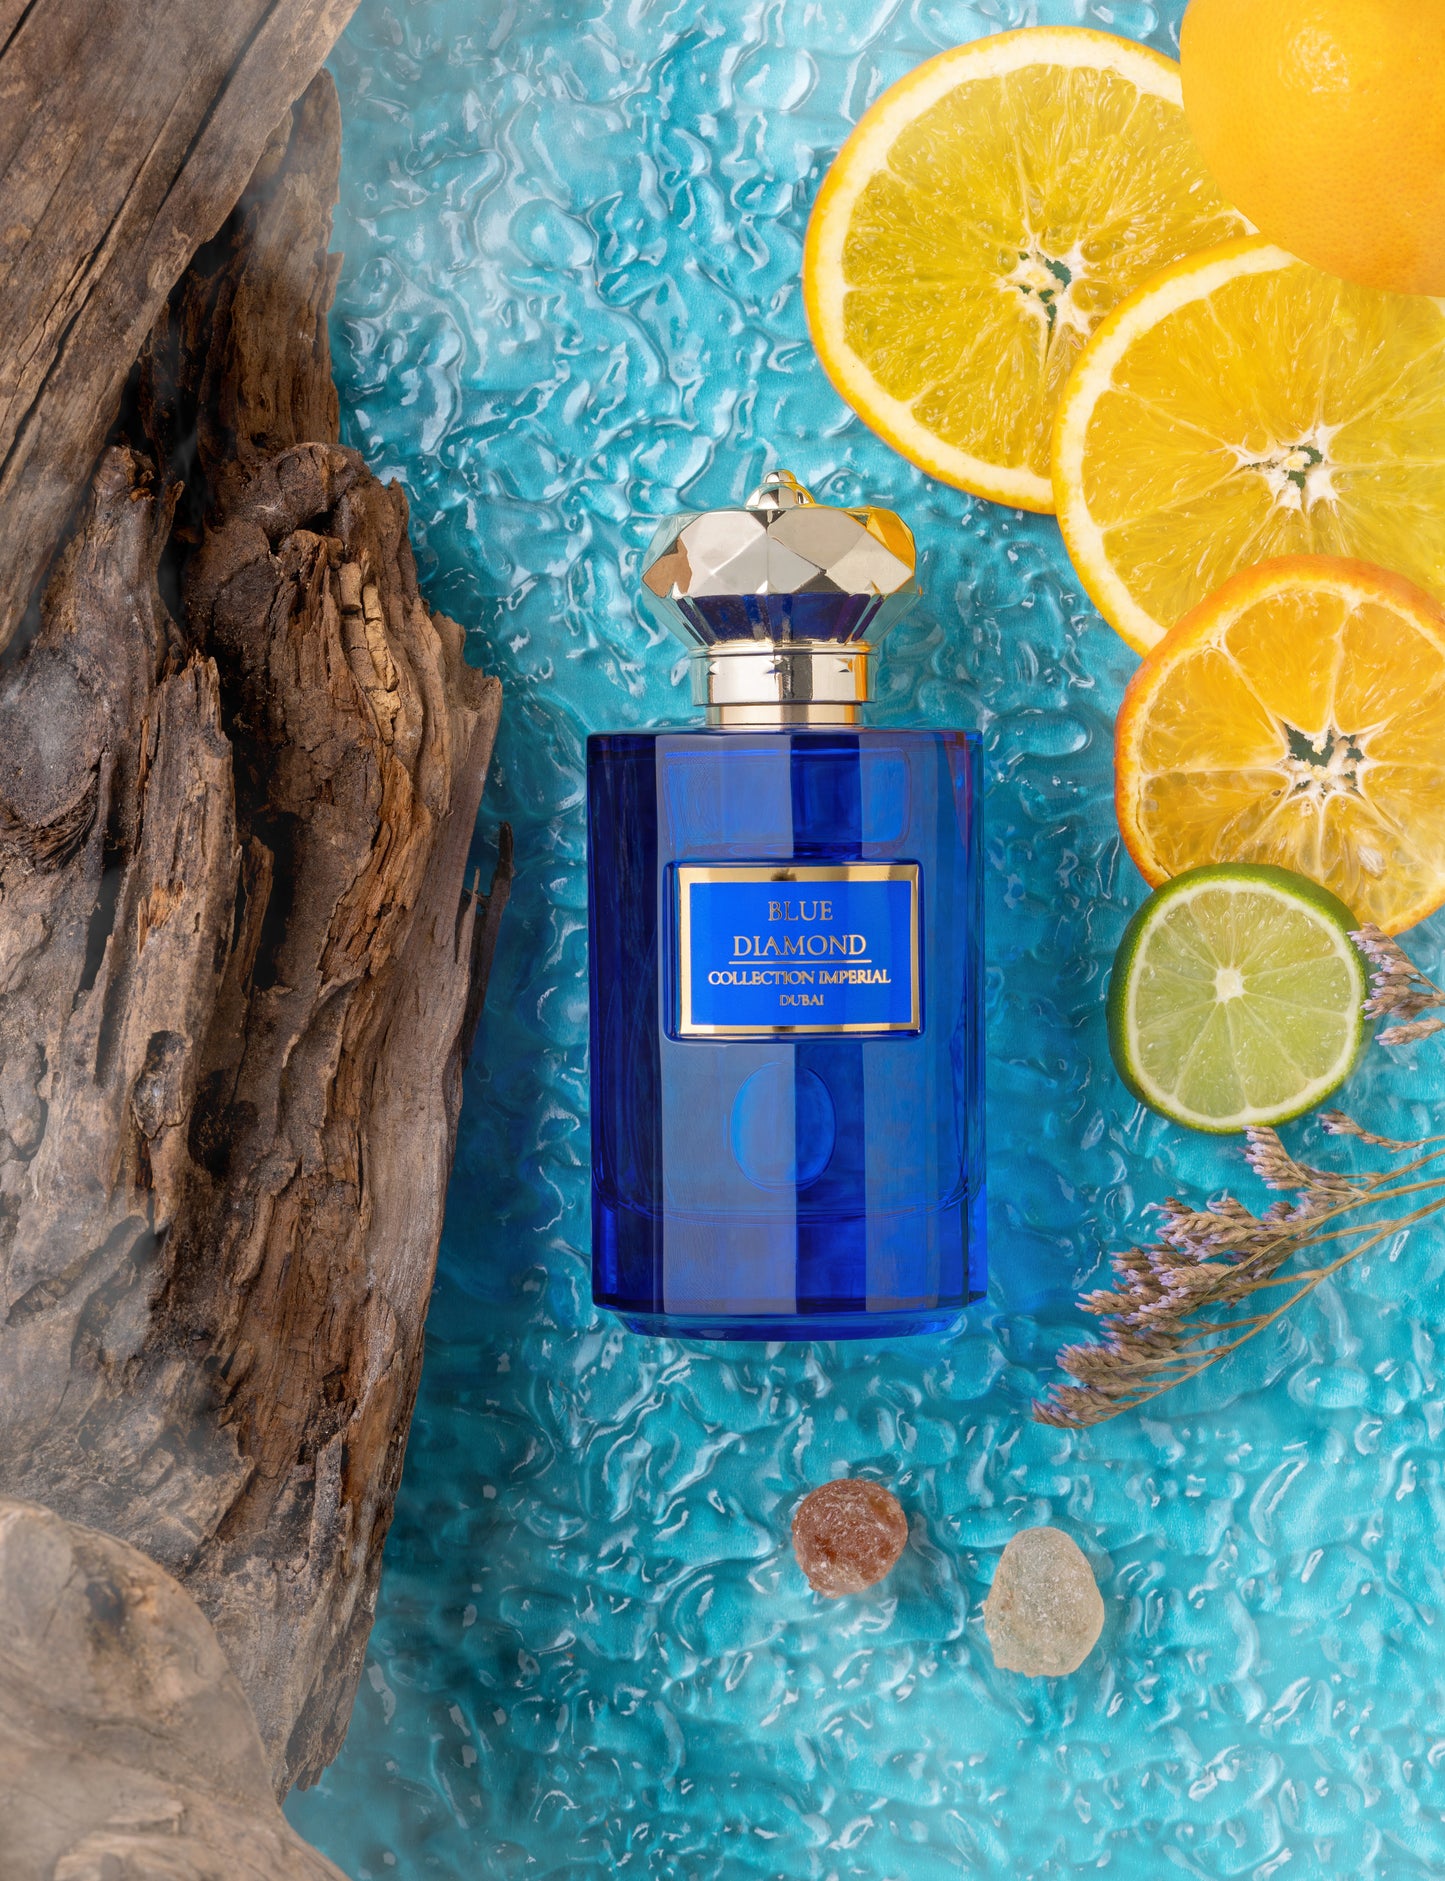 BLUE DIAMOND Dubai Collection unisex fragrances 3.4 oz / 100ml